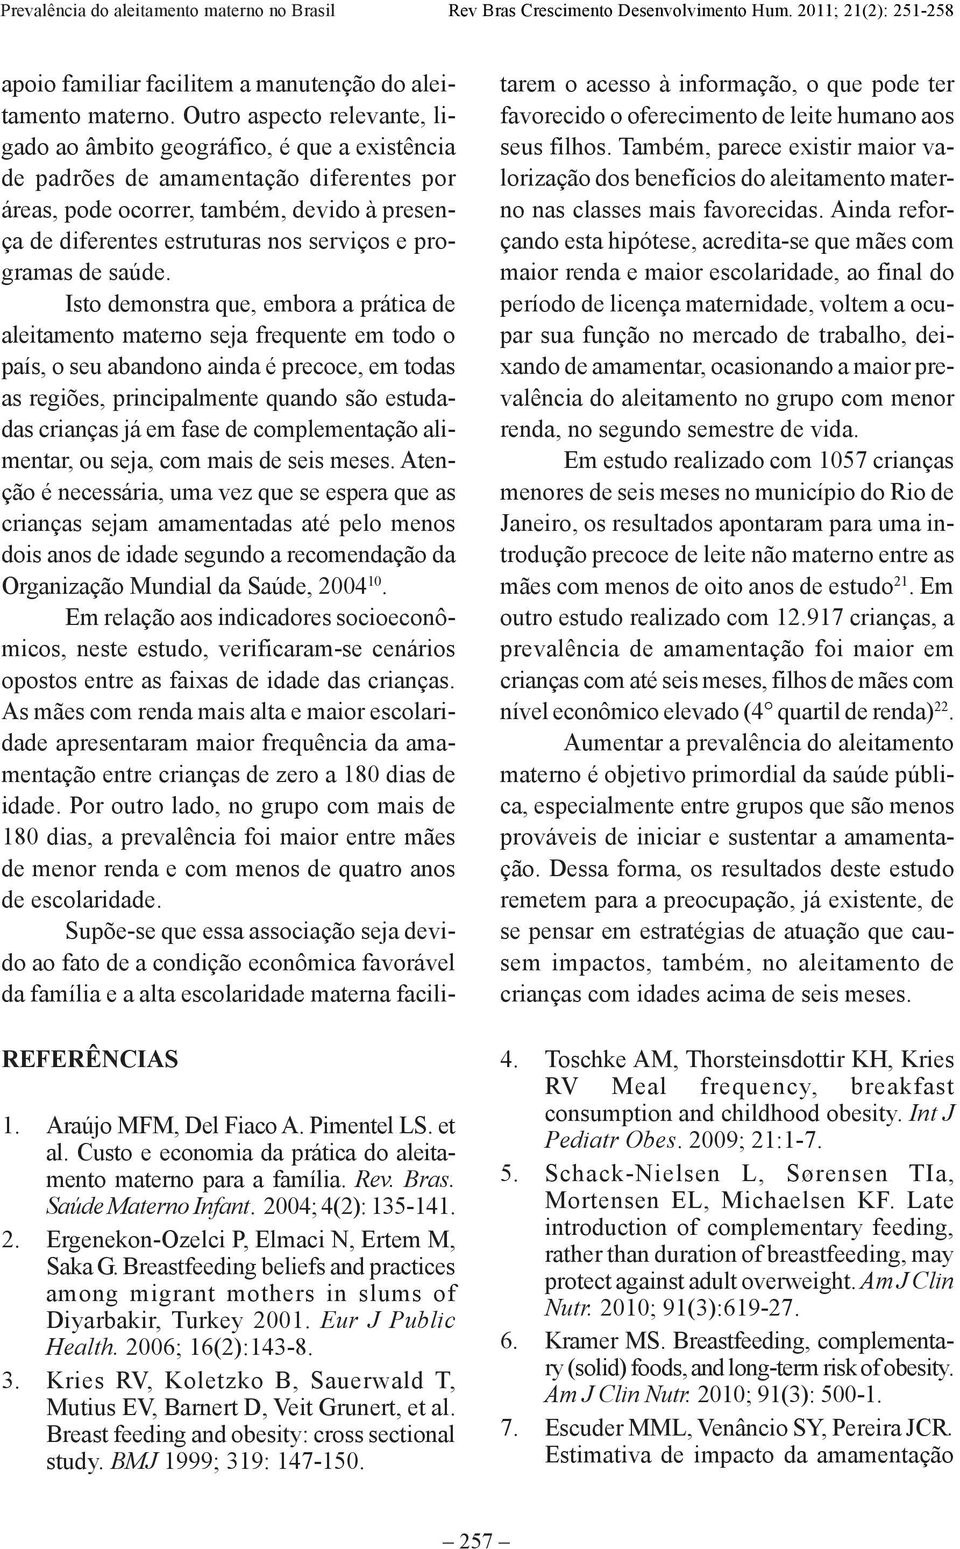 2006; 16(2):143-8. 3. Kries RV, Koletzko B, Sauerwald T, Mutius EV, Barnert D, Veit Grunert, et al. Breast feeding and obesity: cross sectional study. BMJ 1999; 319: 147-150.